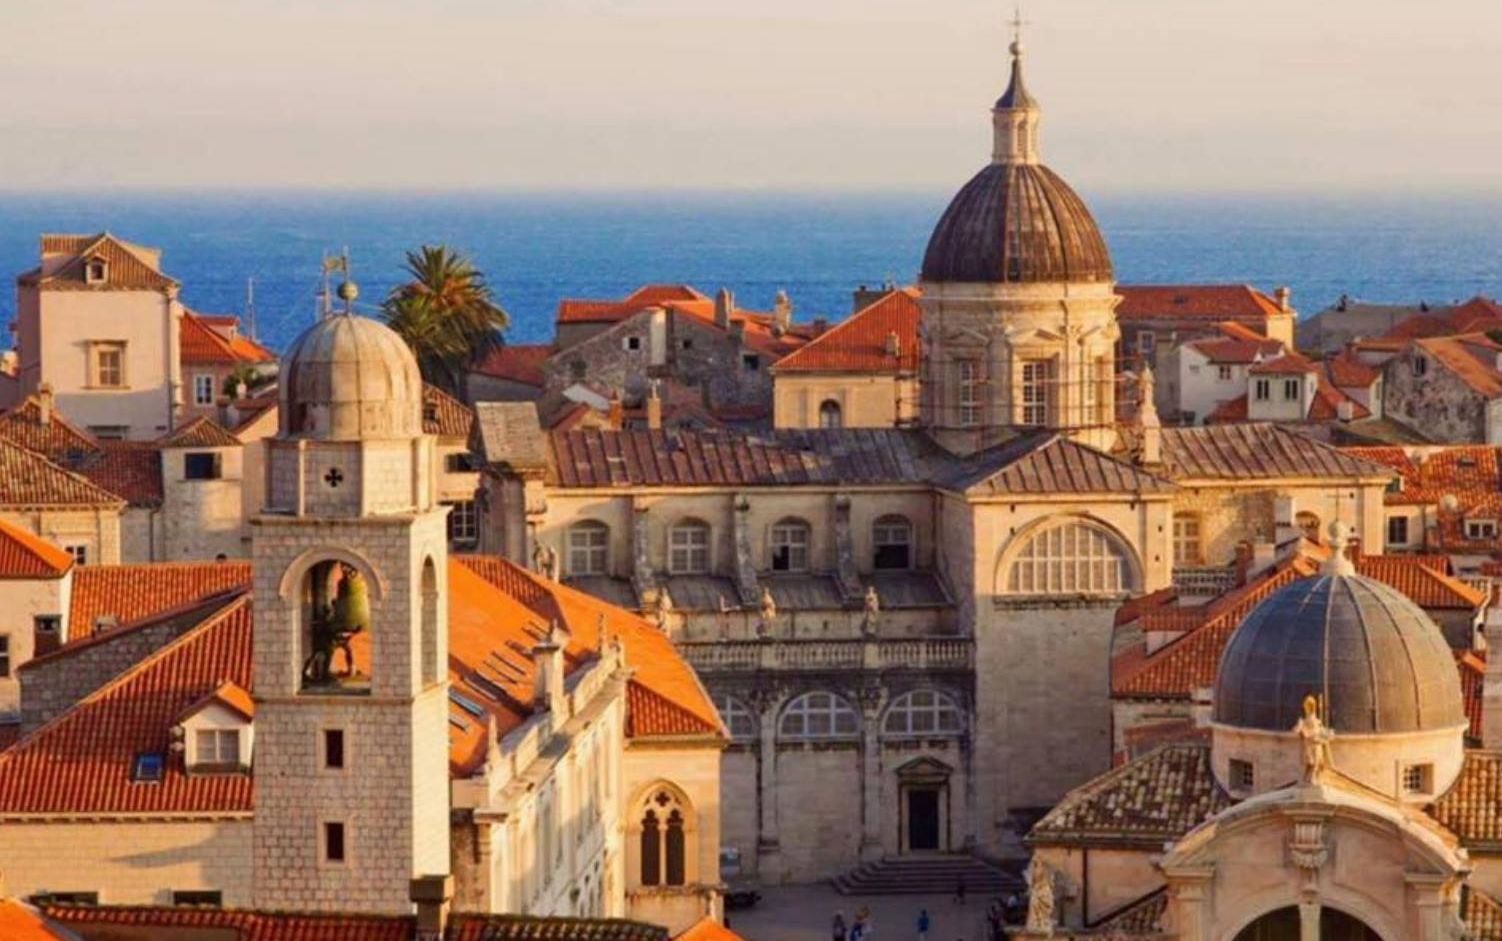 Monastery in Dubrovnik on the Dalmatian Coast of Croatia